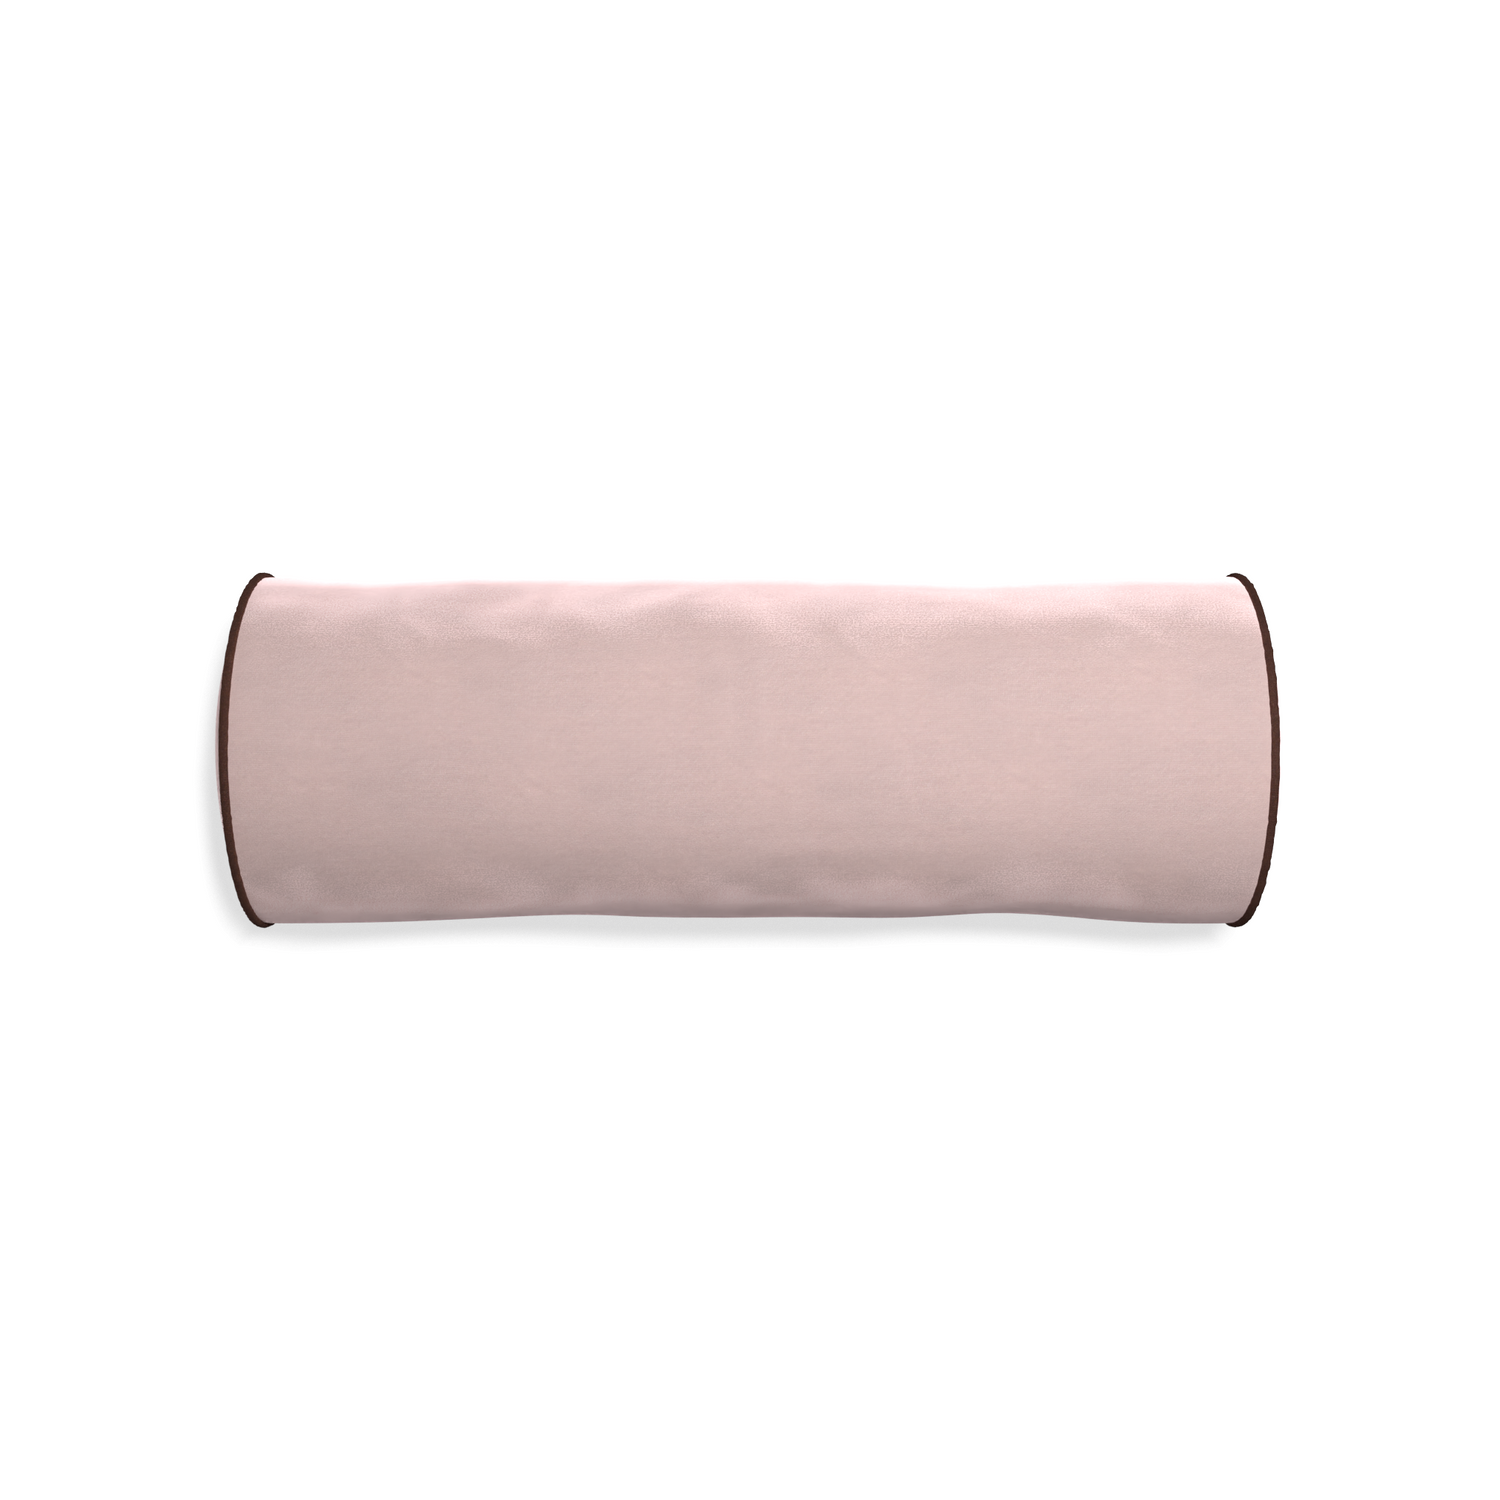 bolster light pink velvet pillow with brown piping 